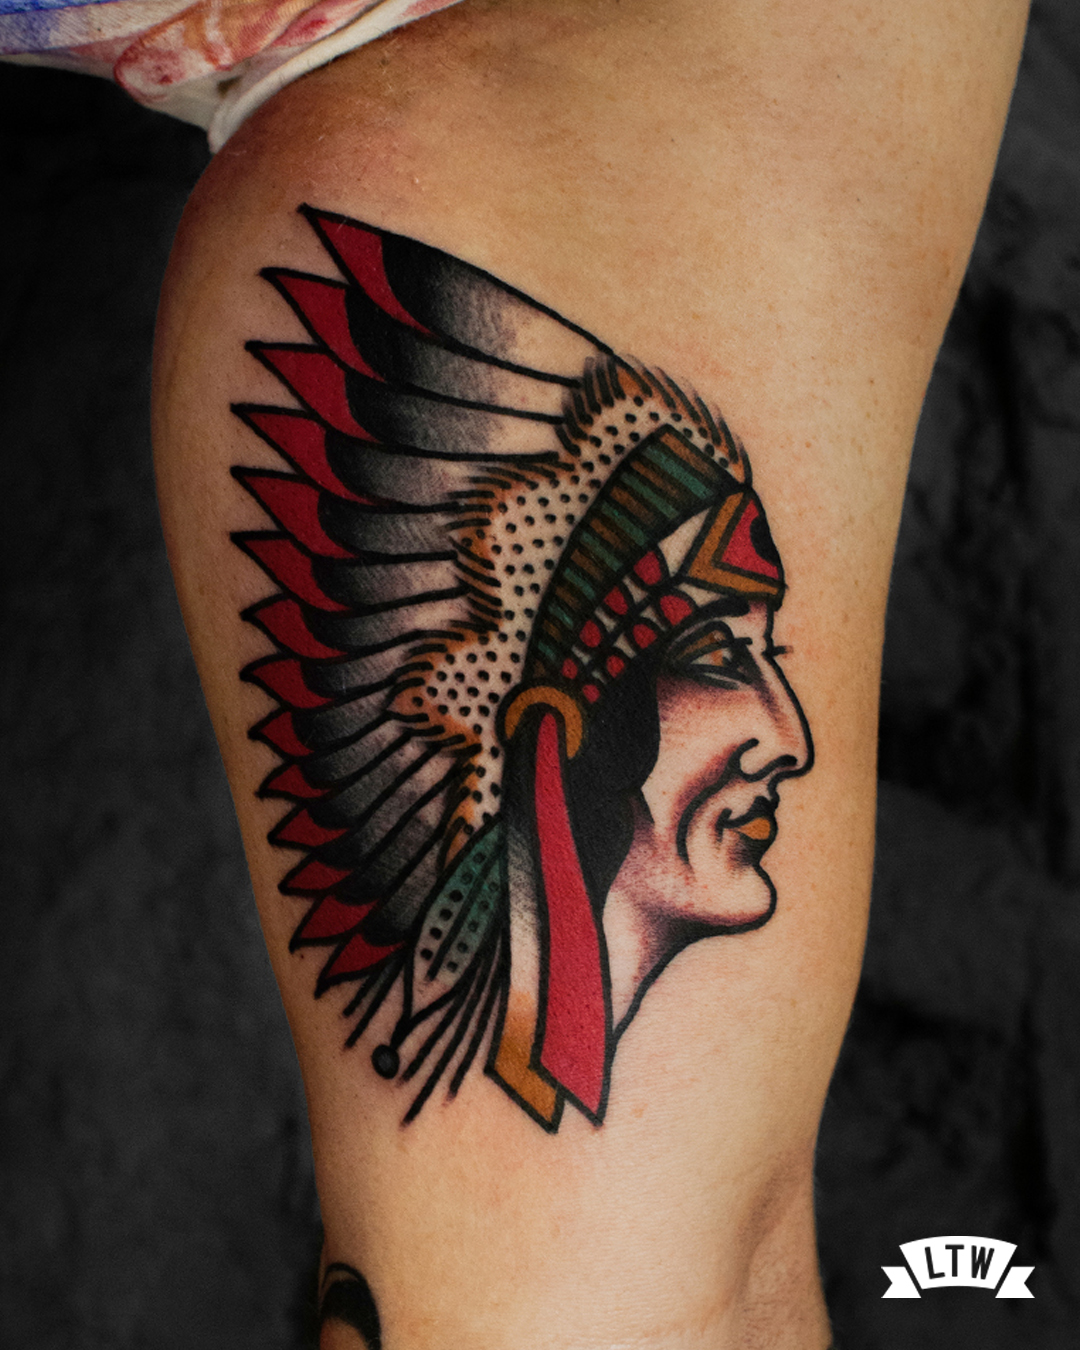 Natiu americà tatuat a bíceps per en Dennis